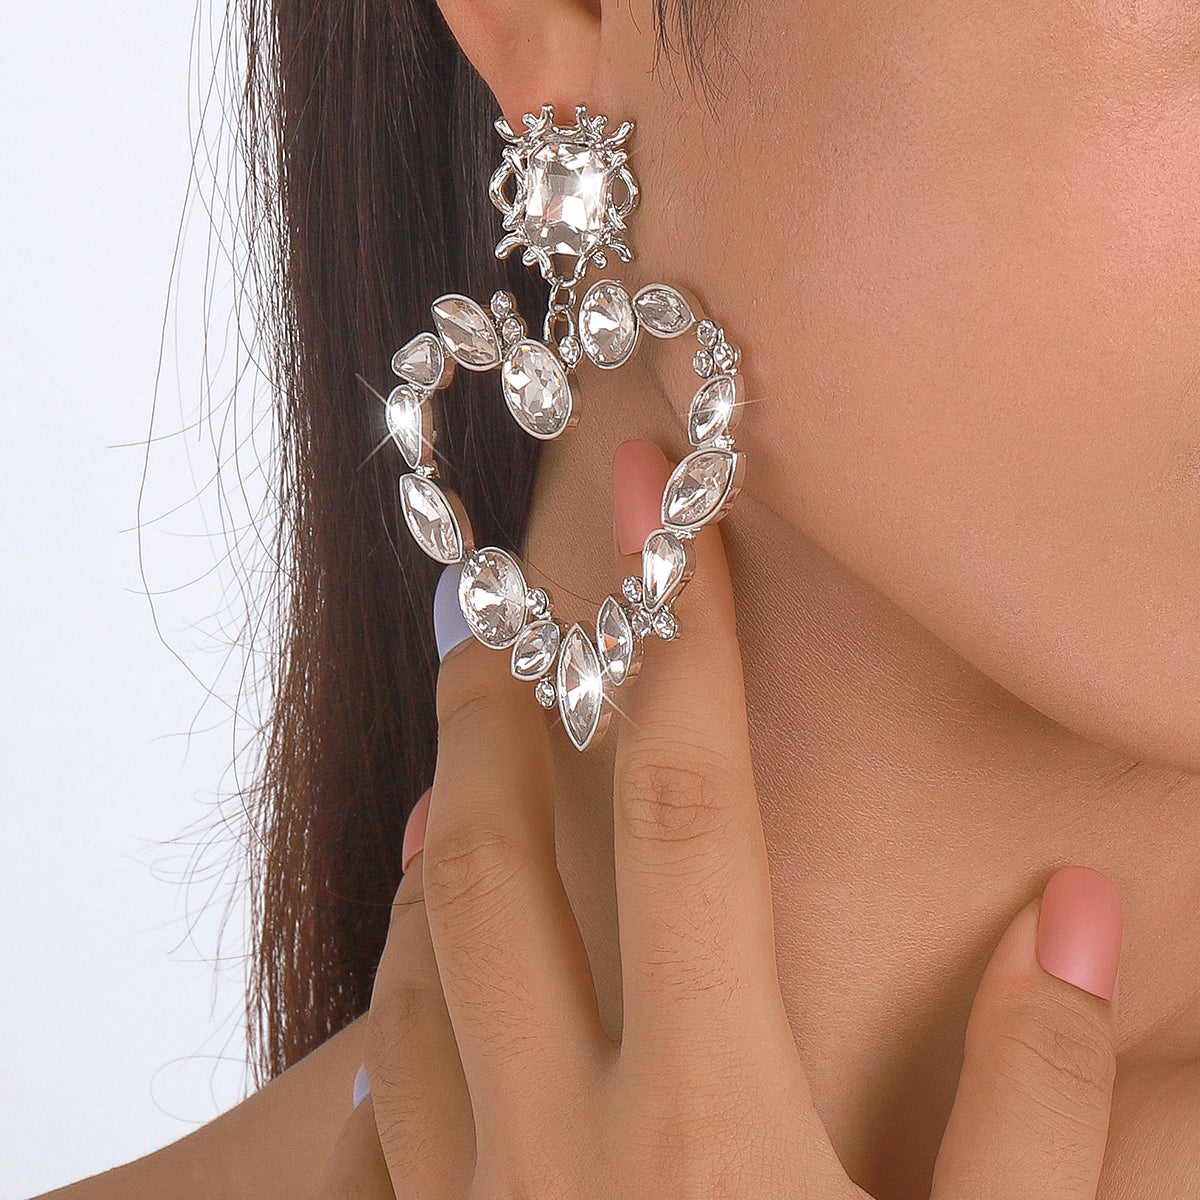 Exquisite Rhinestone Heart Dangle Earrings medyjewelry